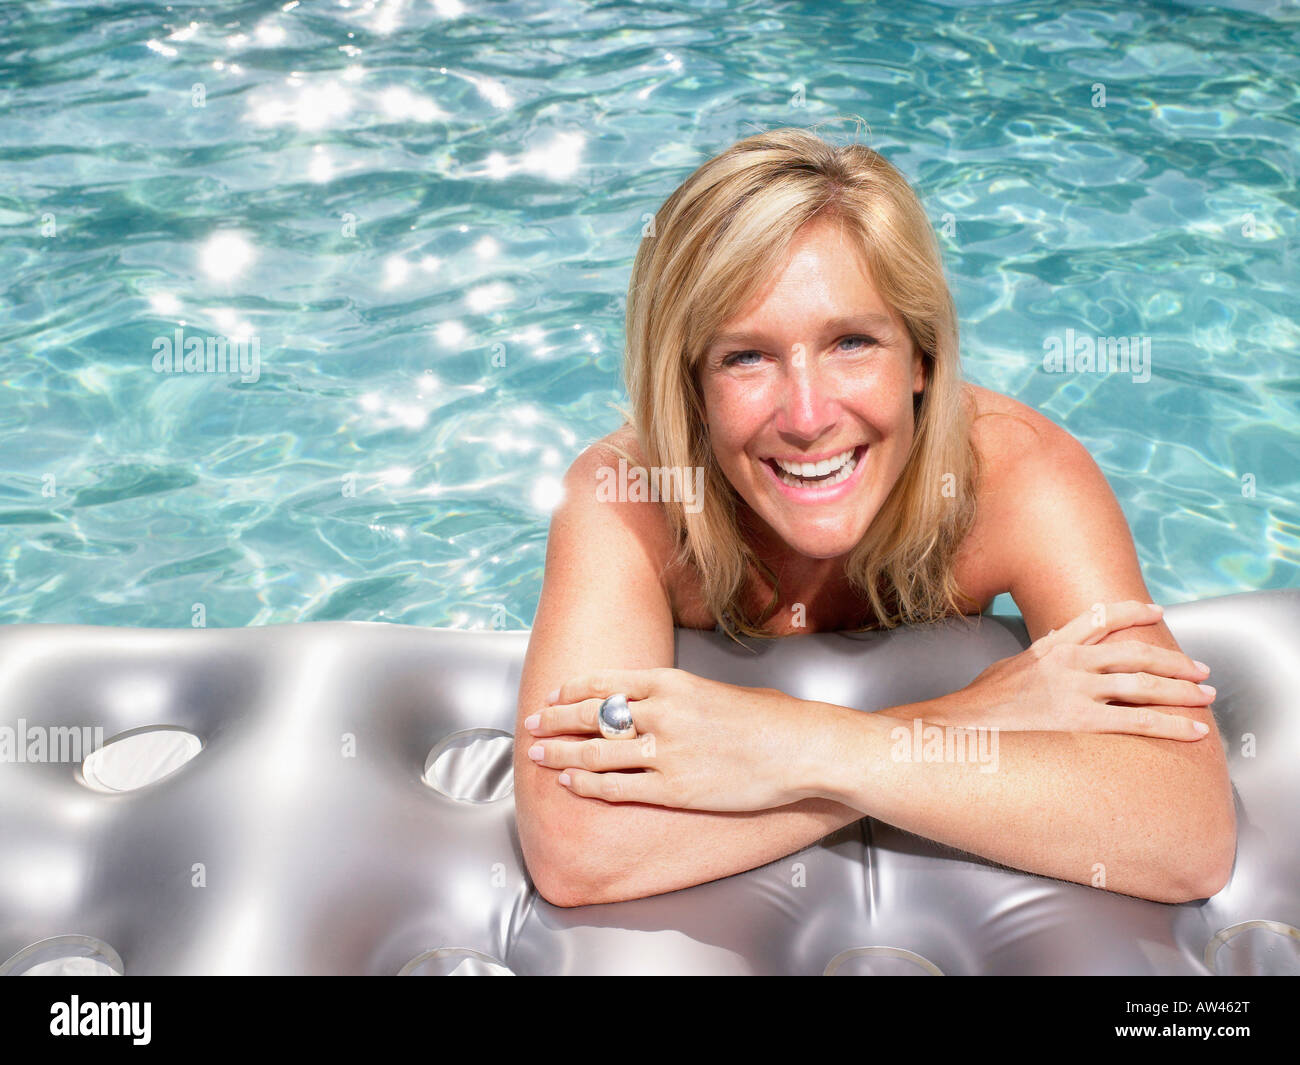 Woman on air mattress in pool. Stock Photo